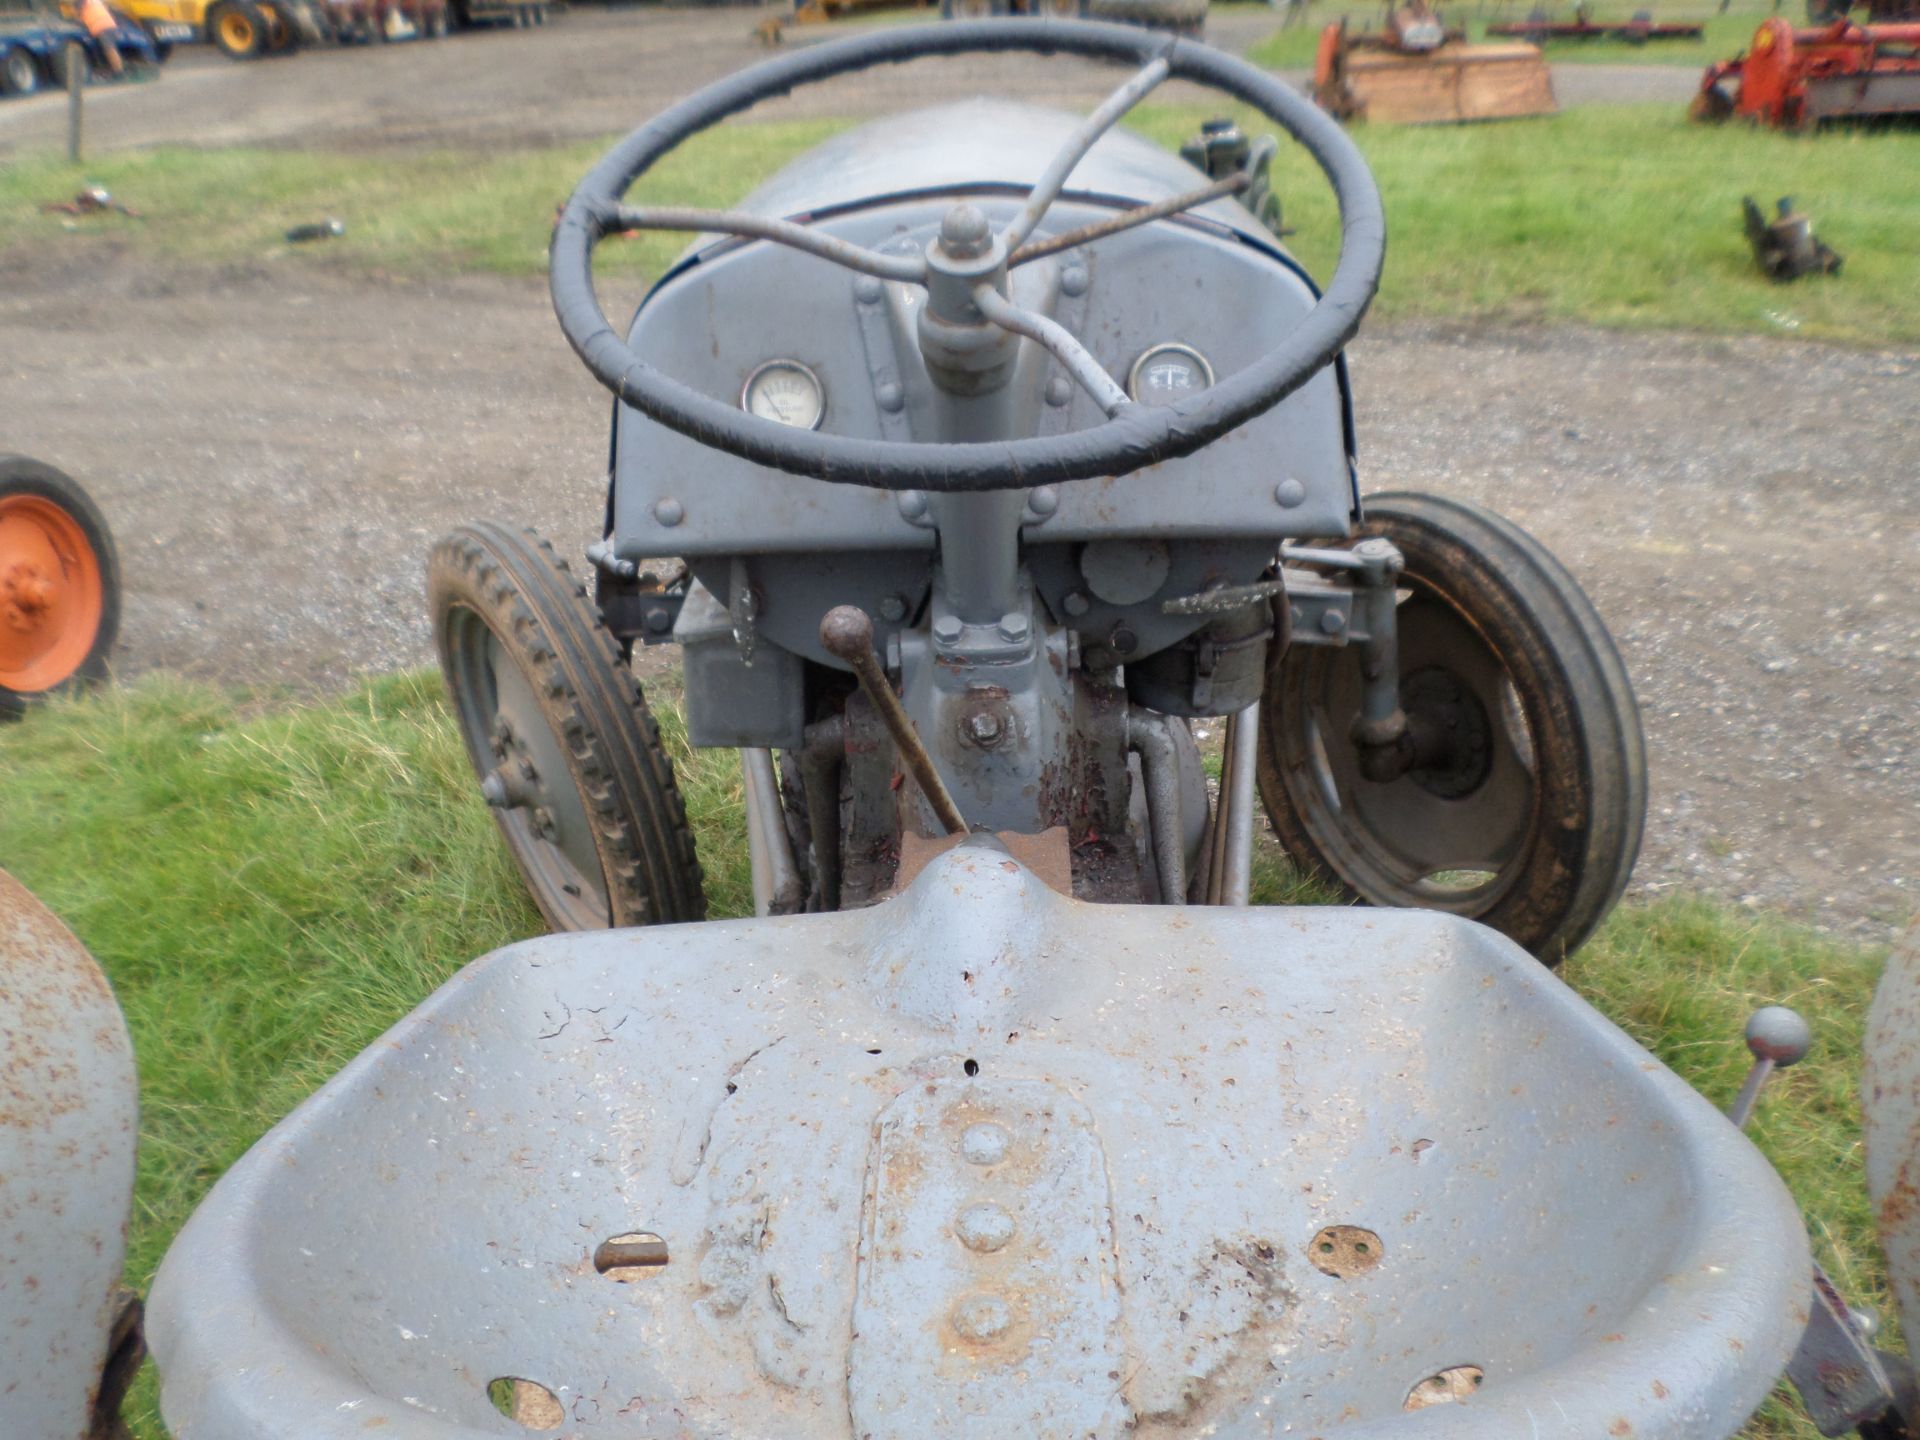 Massey Ferguson 1951 petrol tractor, barn find - Image 3 of 4